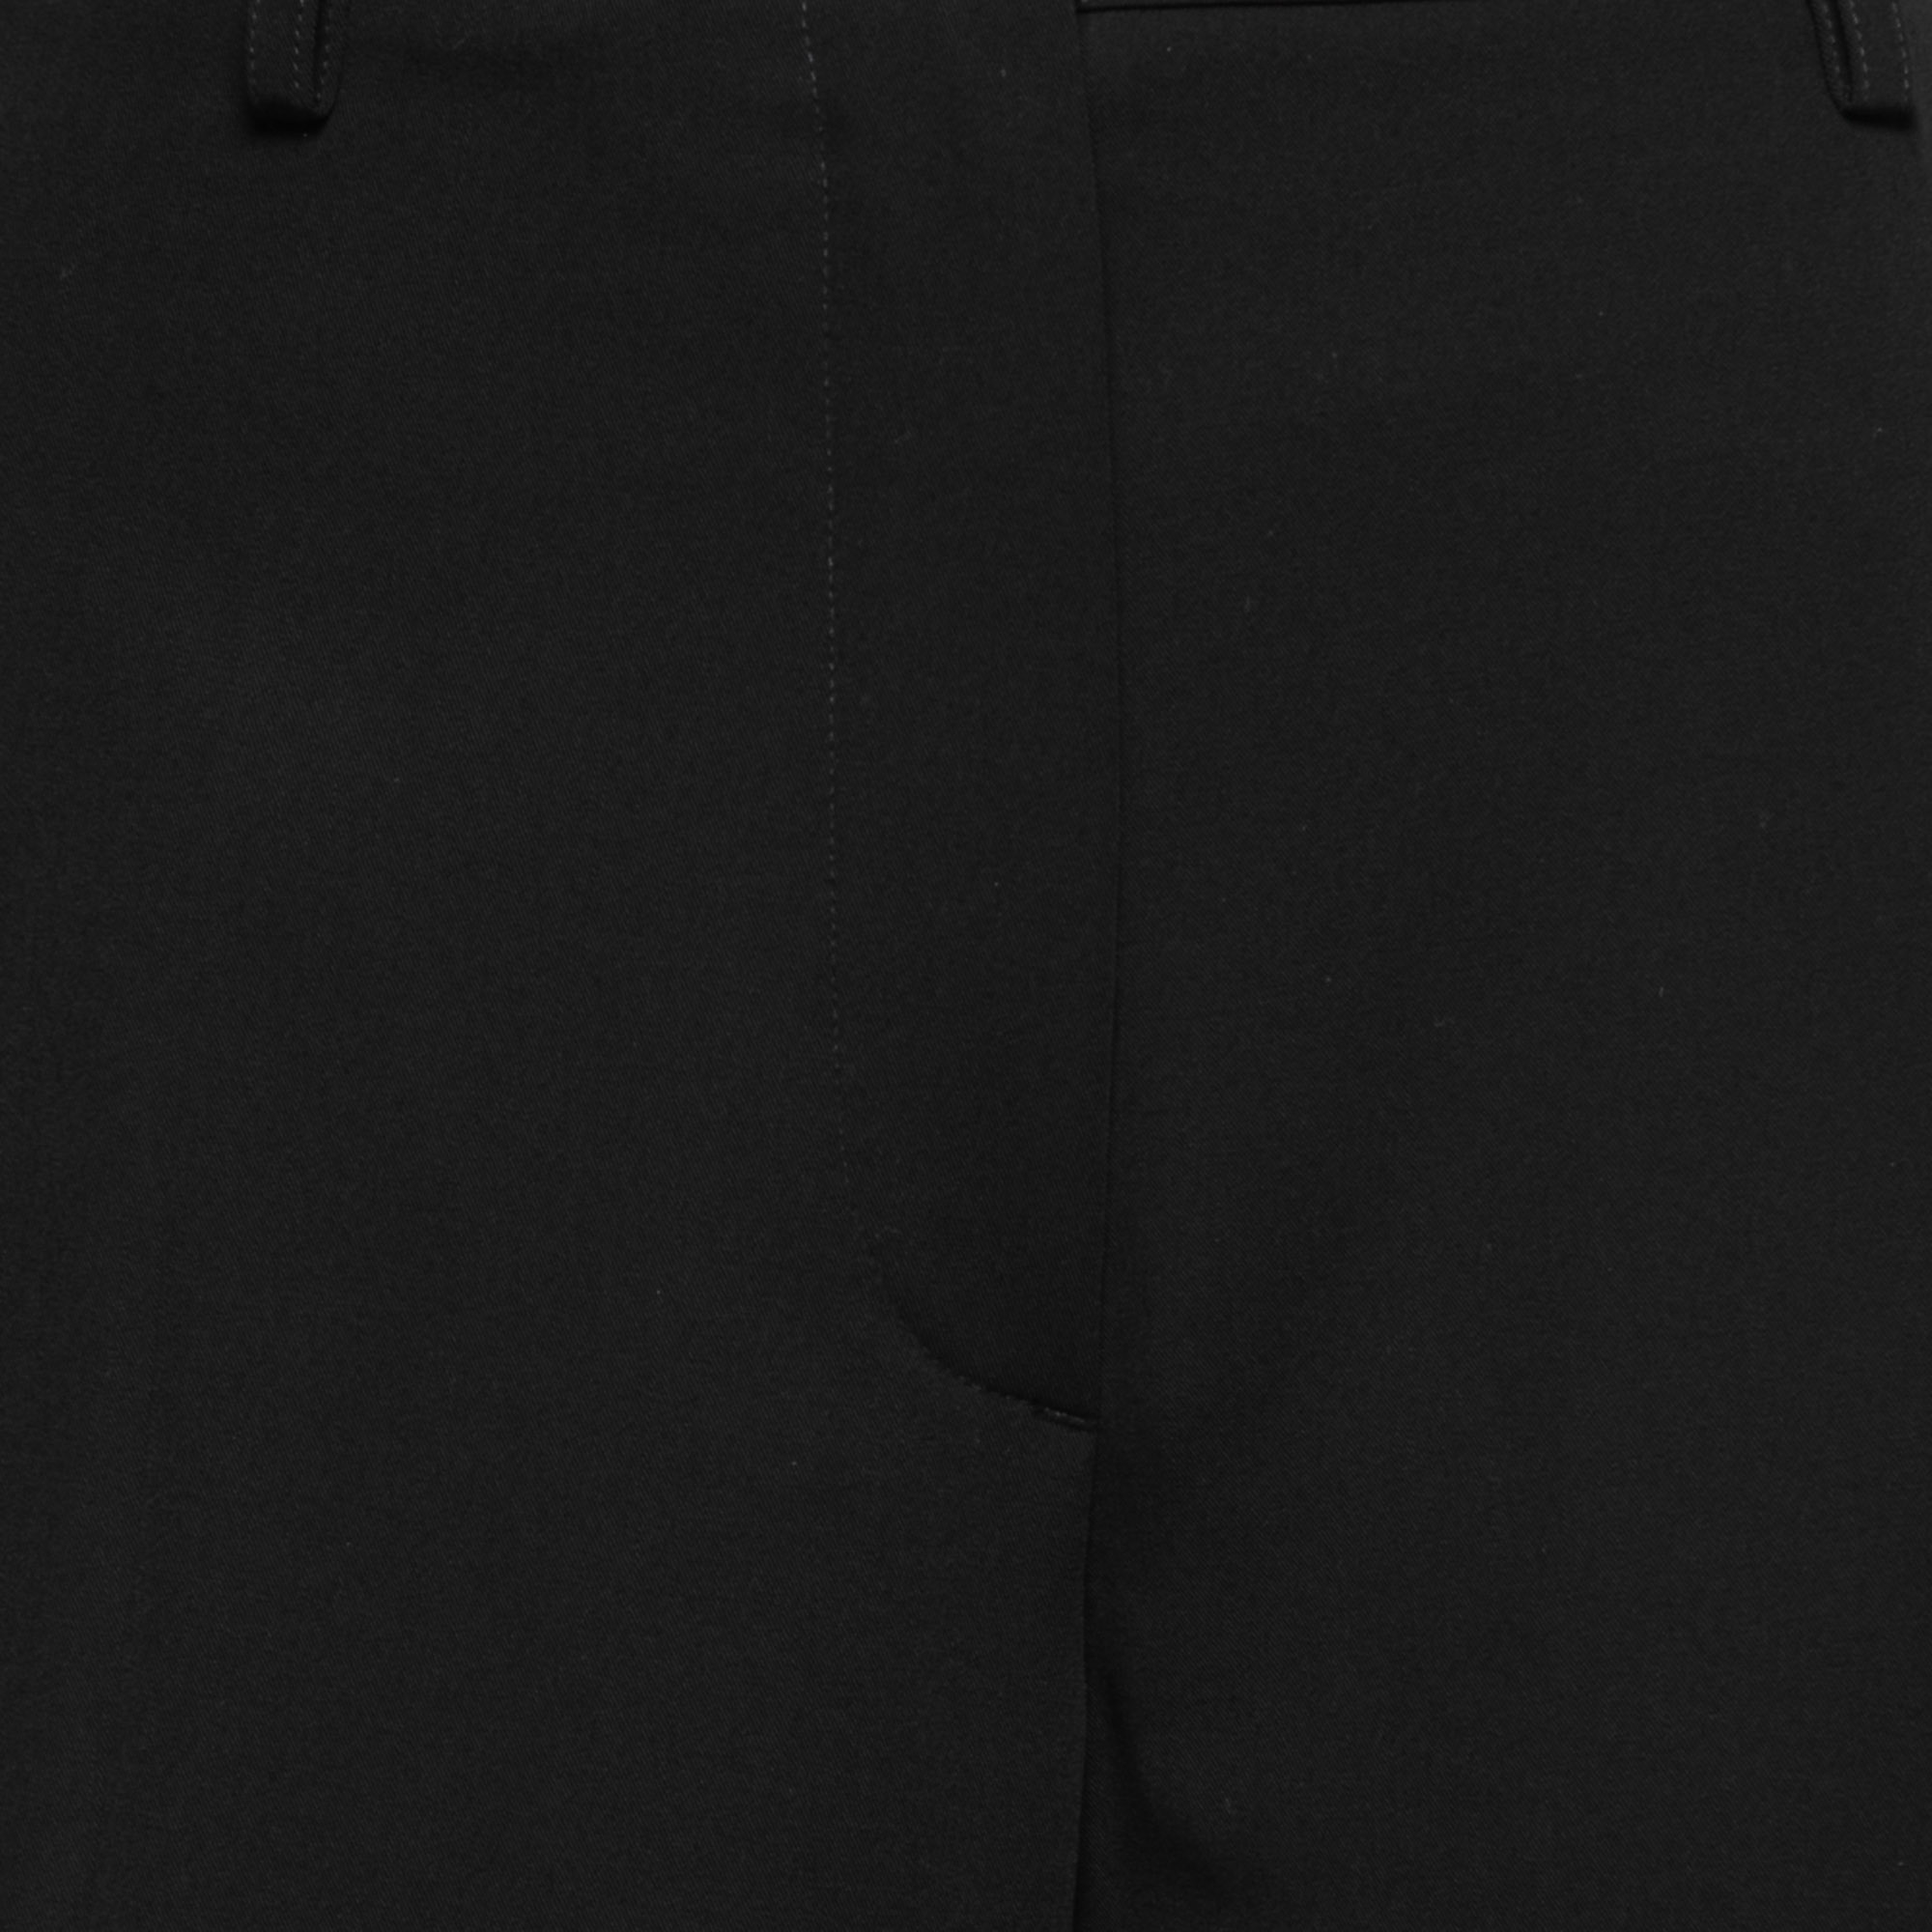 Gianfranco Ferre Vintage Black Wool-Crepe Wide Leg Pants L